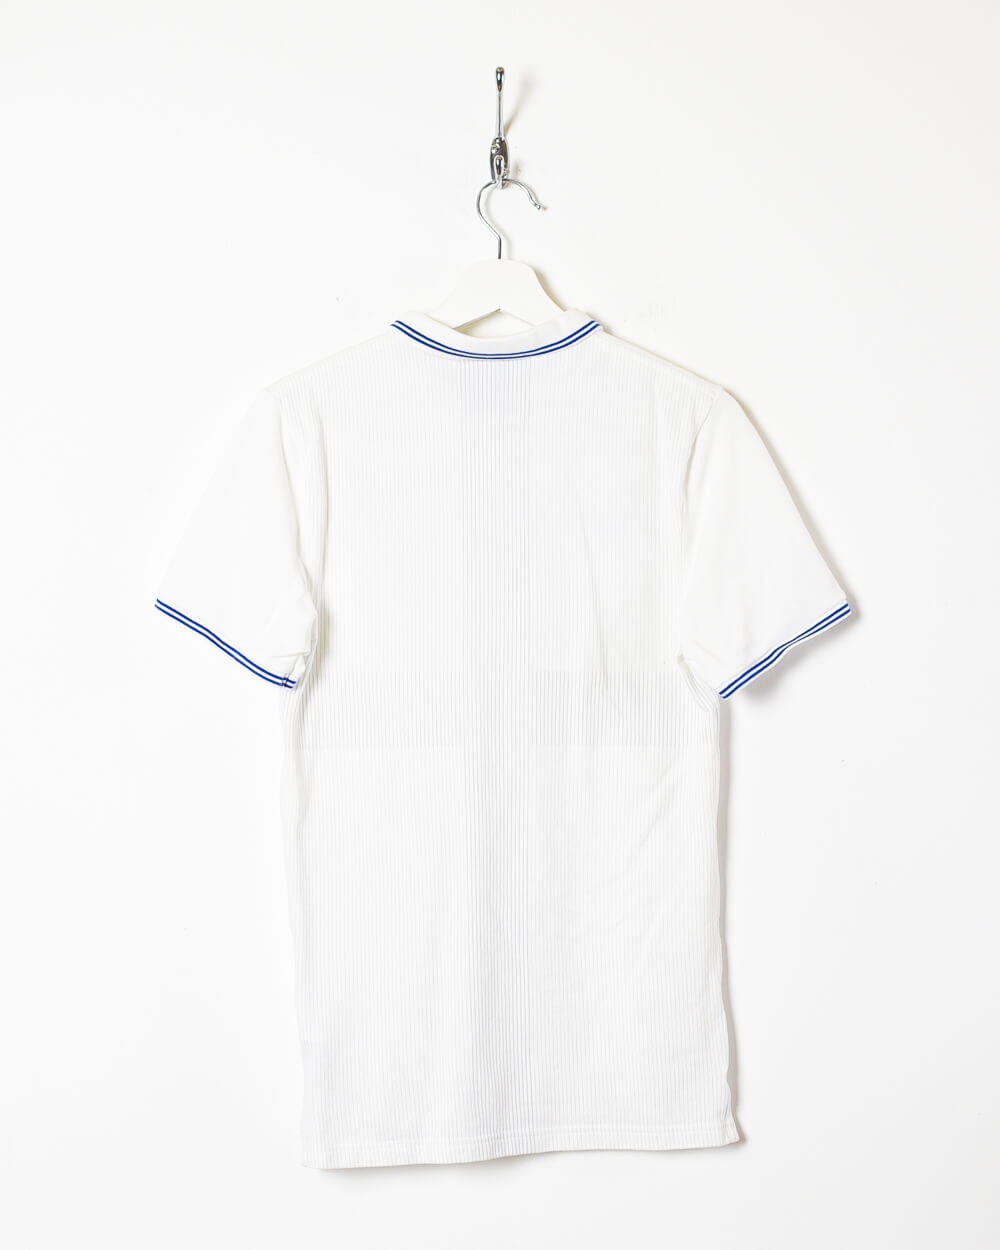 White Nike  England Polo Shirt - Small